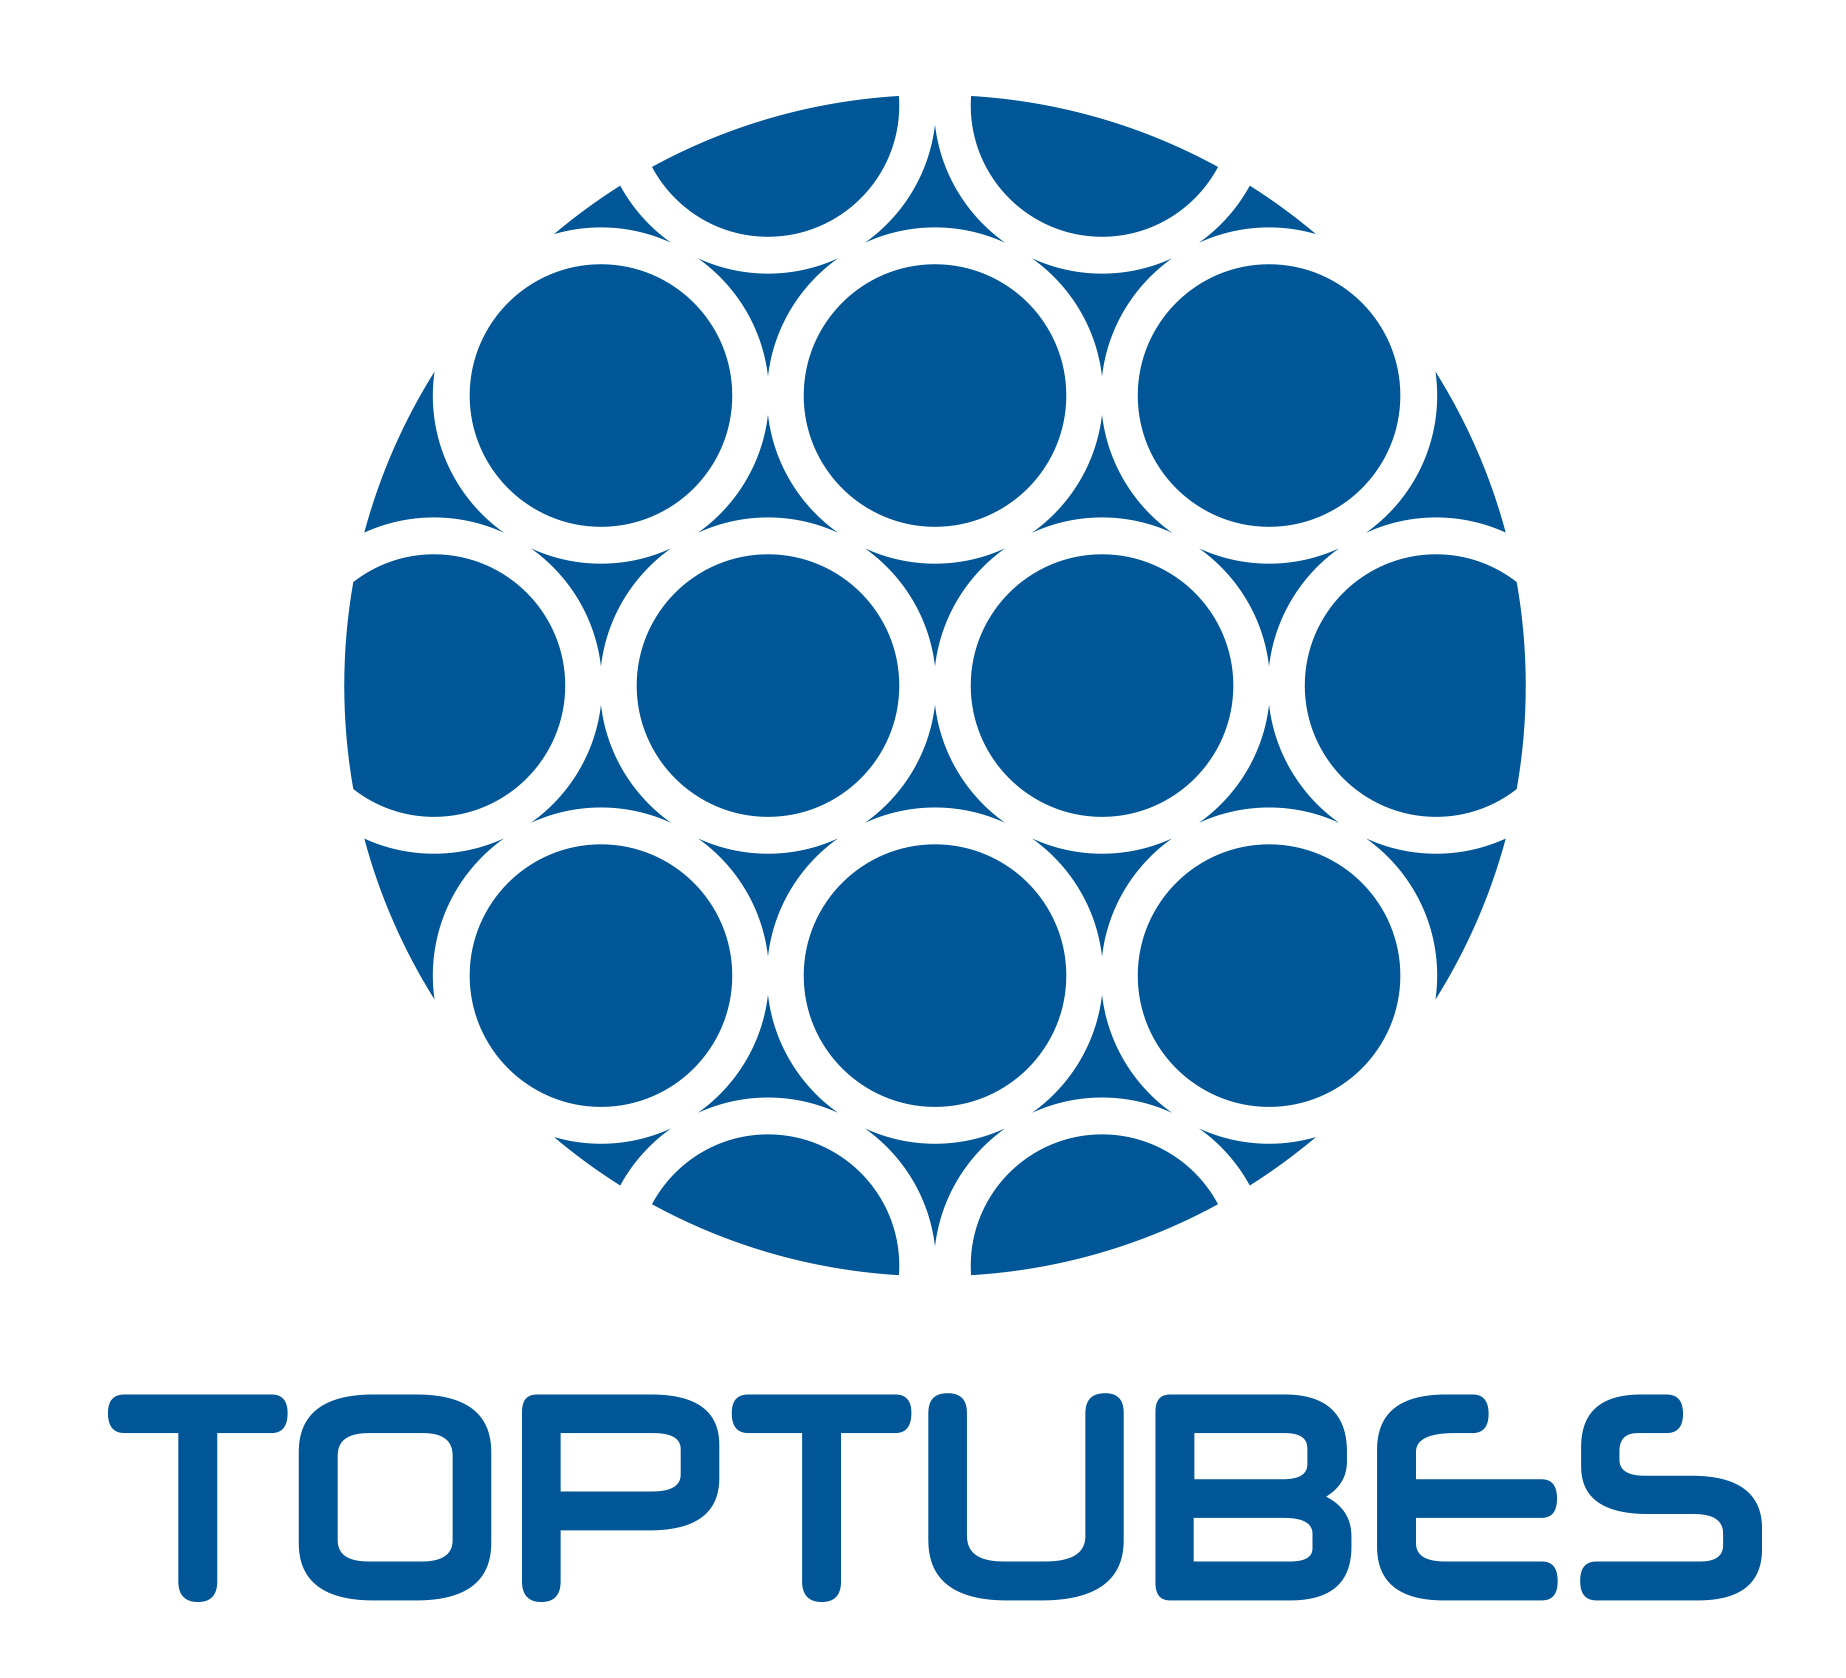 Top Tubes logo vertical A Pantone NEW